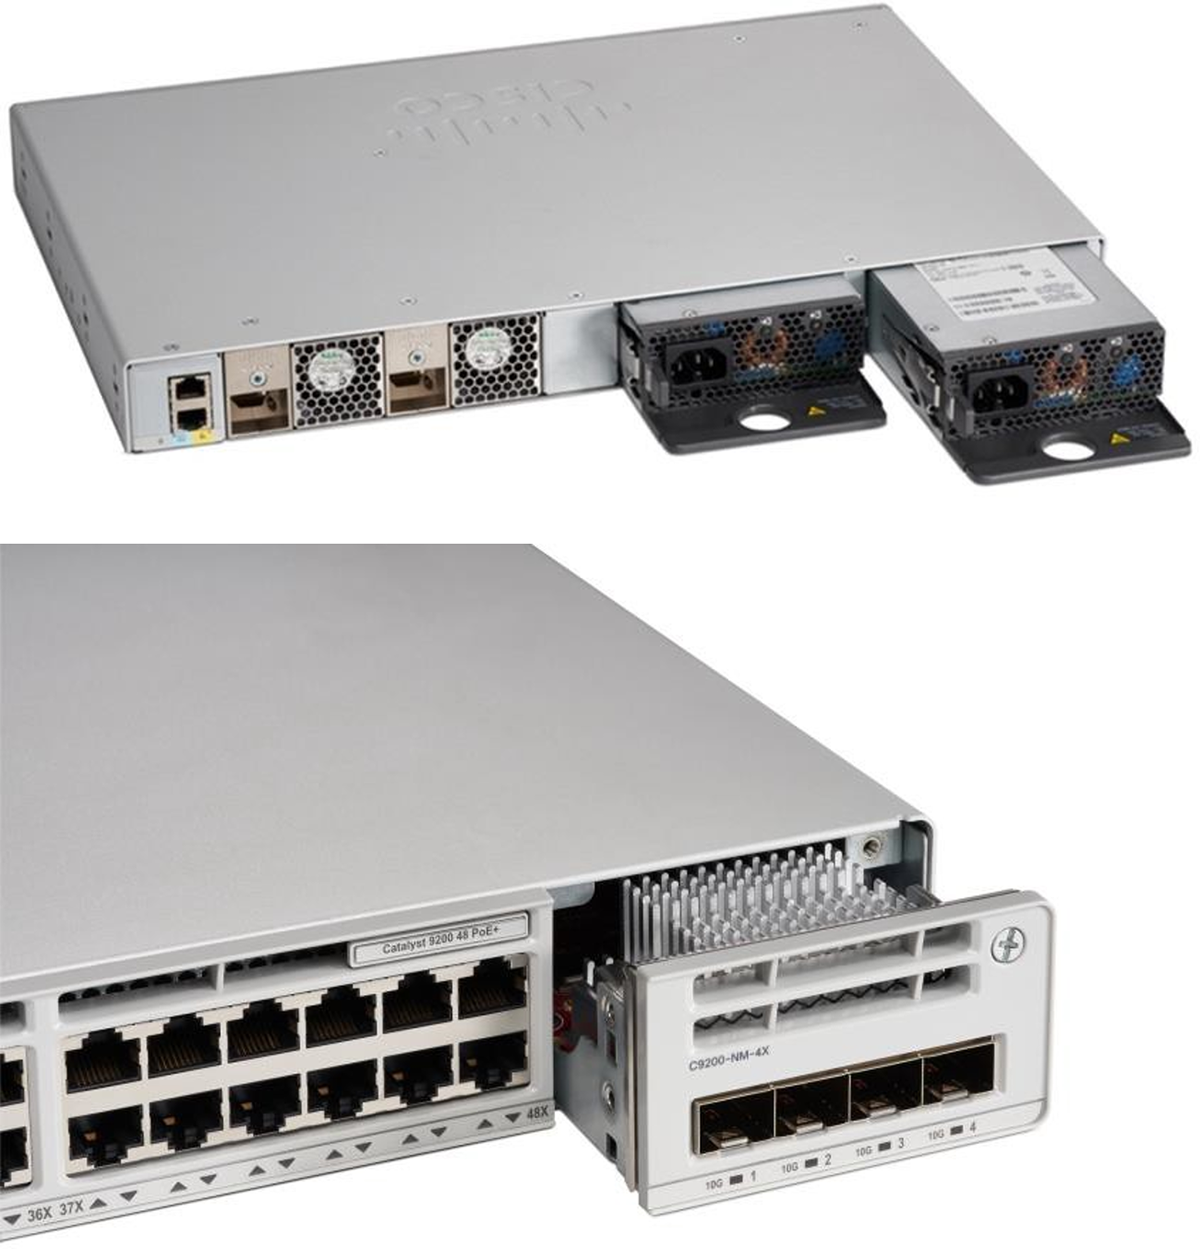 Cisco Catalyst 9200 Series Switch dual redundant power supplies